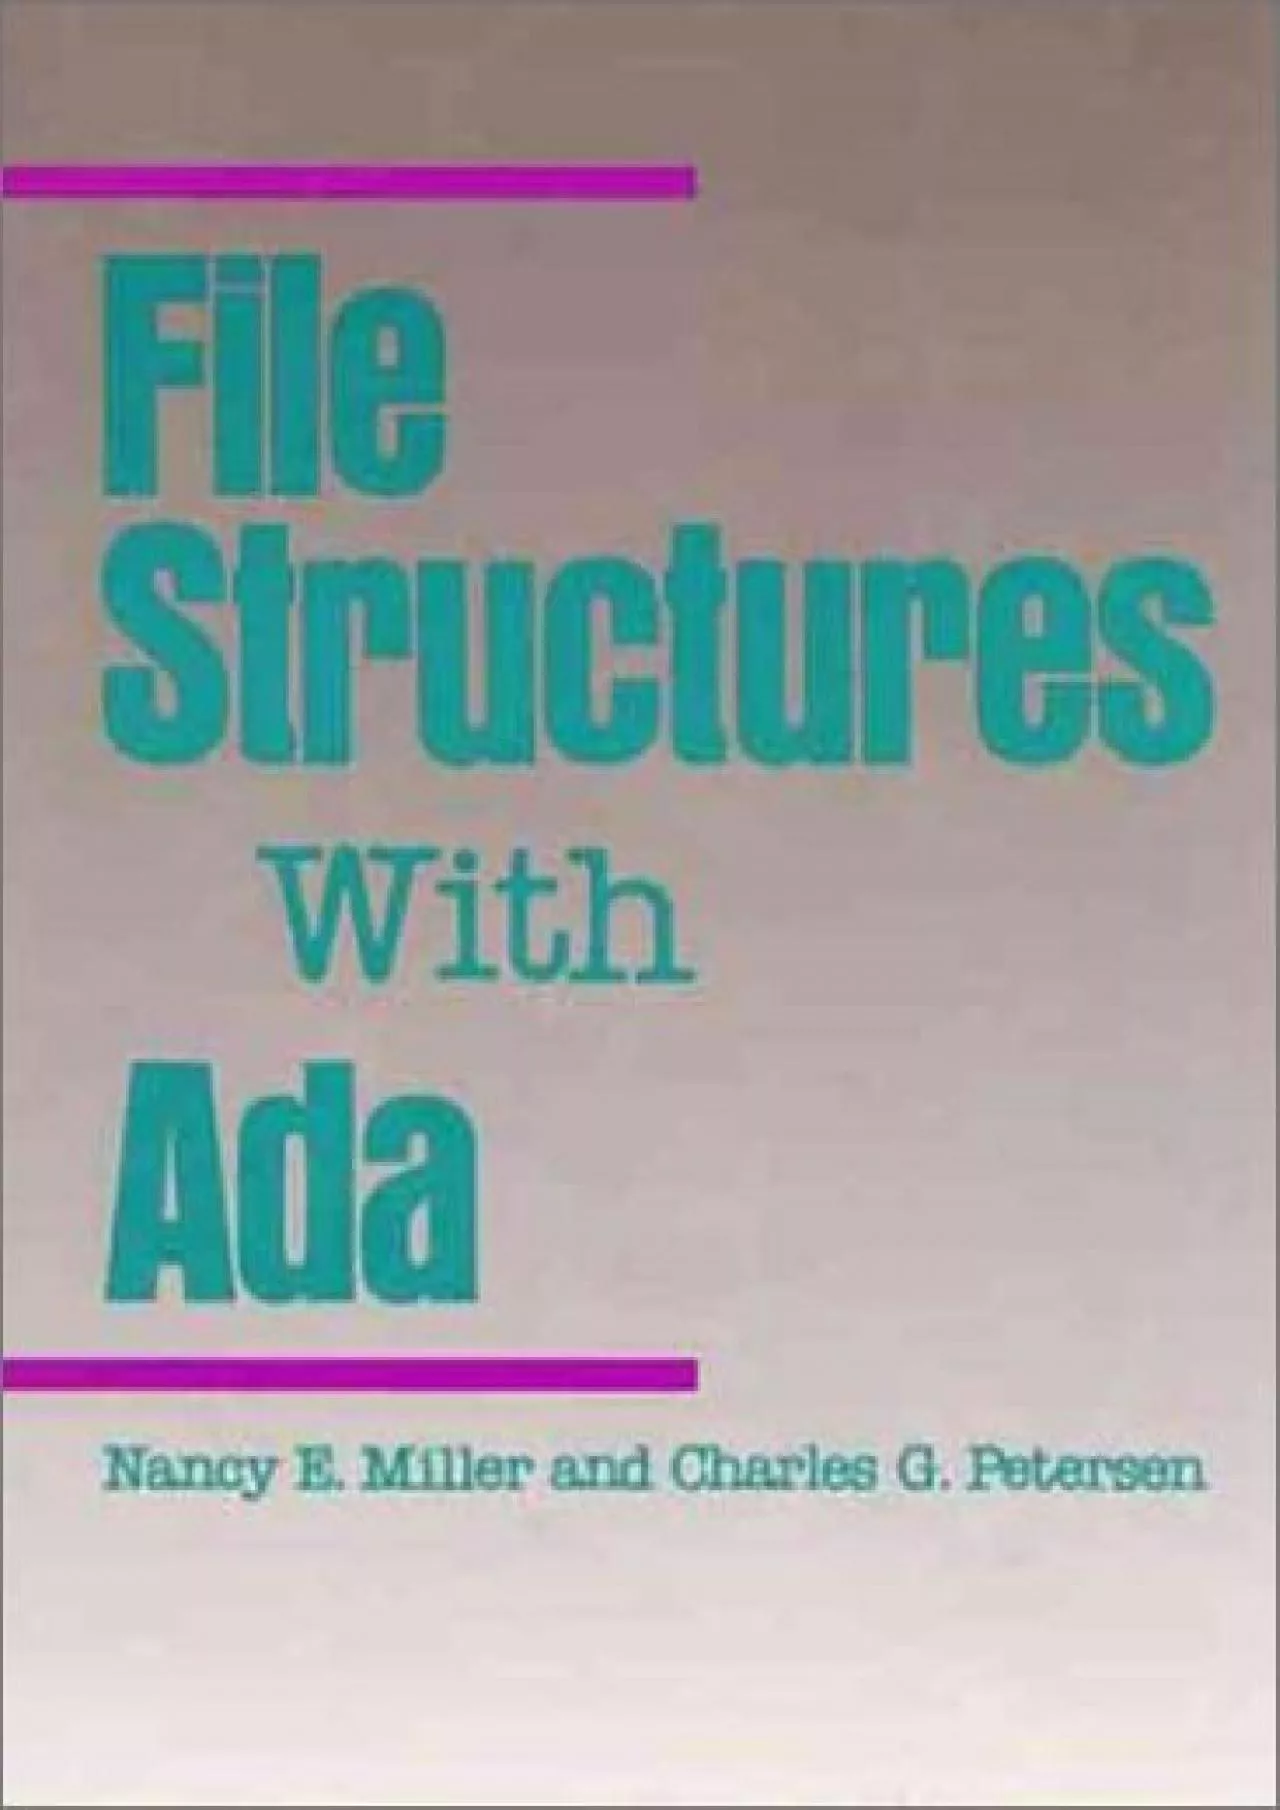 [BEST]-File Structures With Ada (Benjamin Cummings Series in Computer Science)